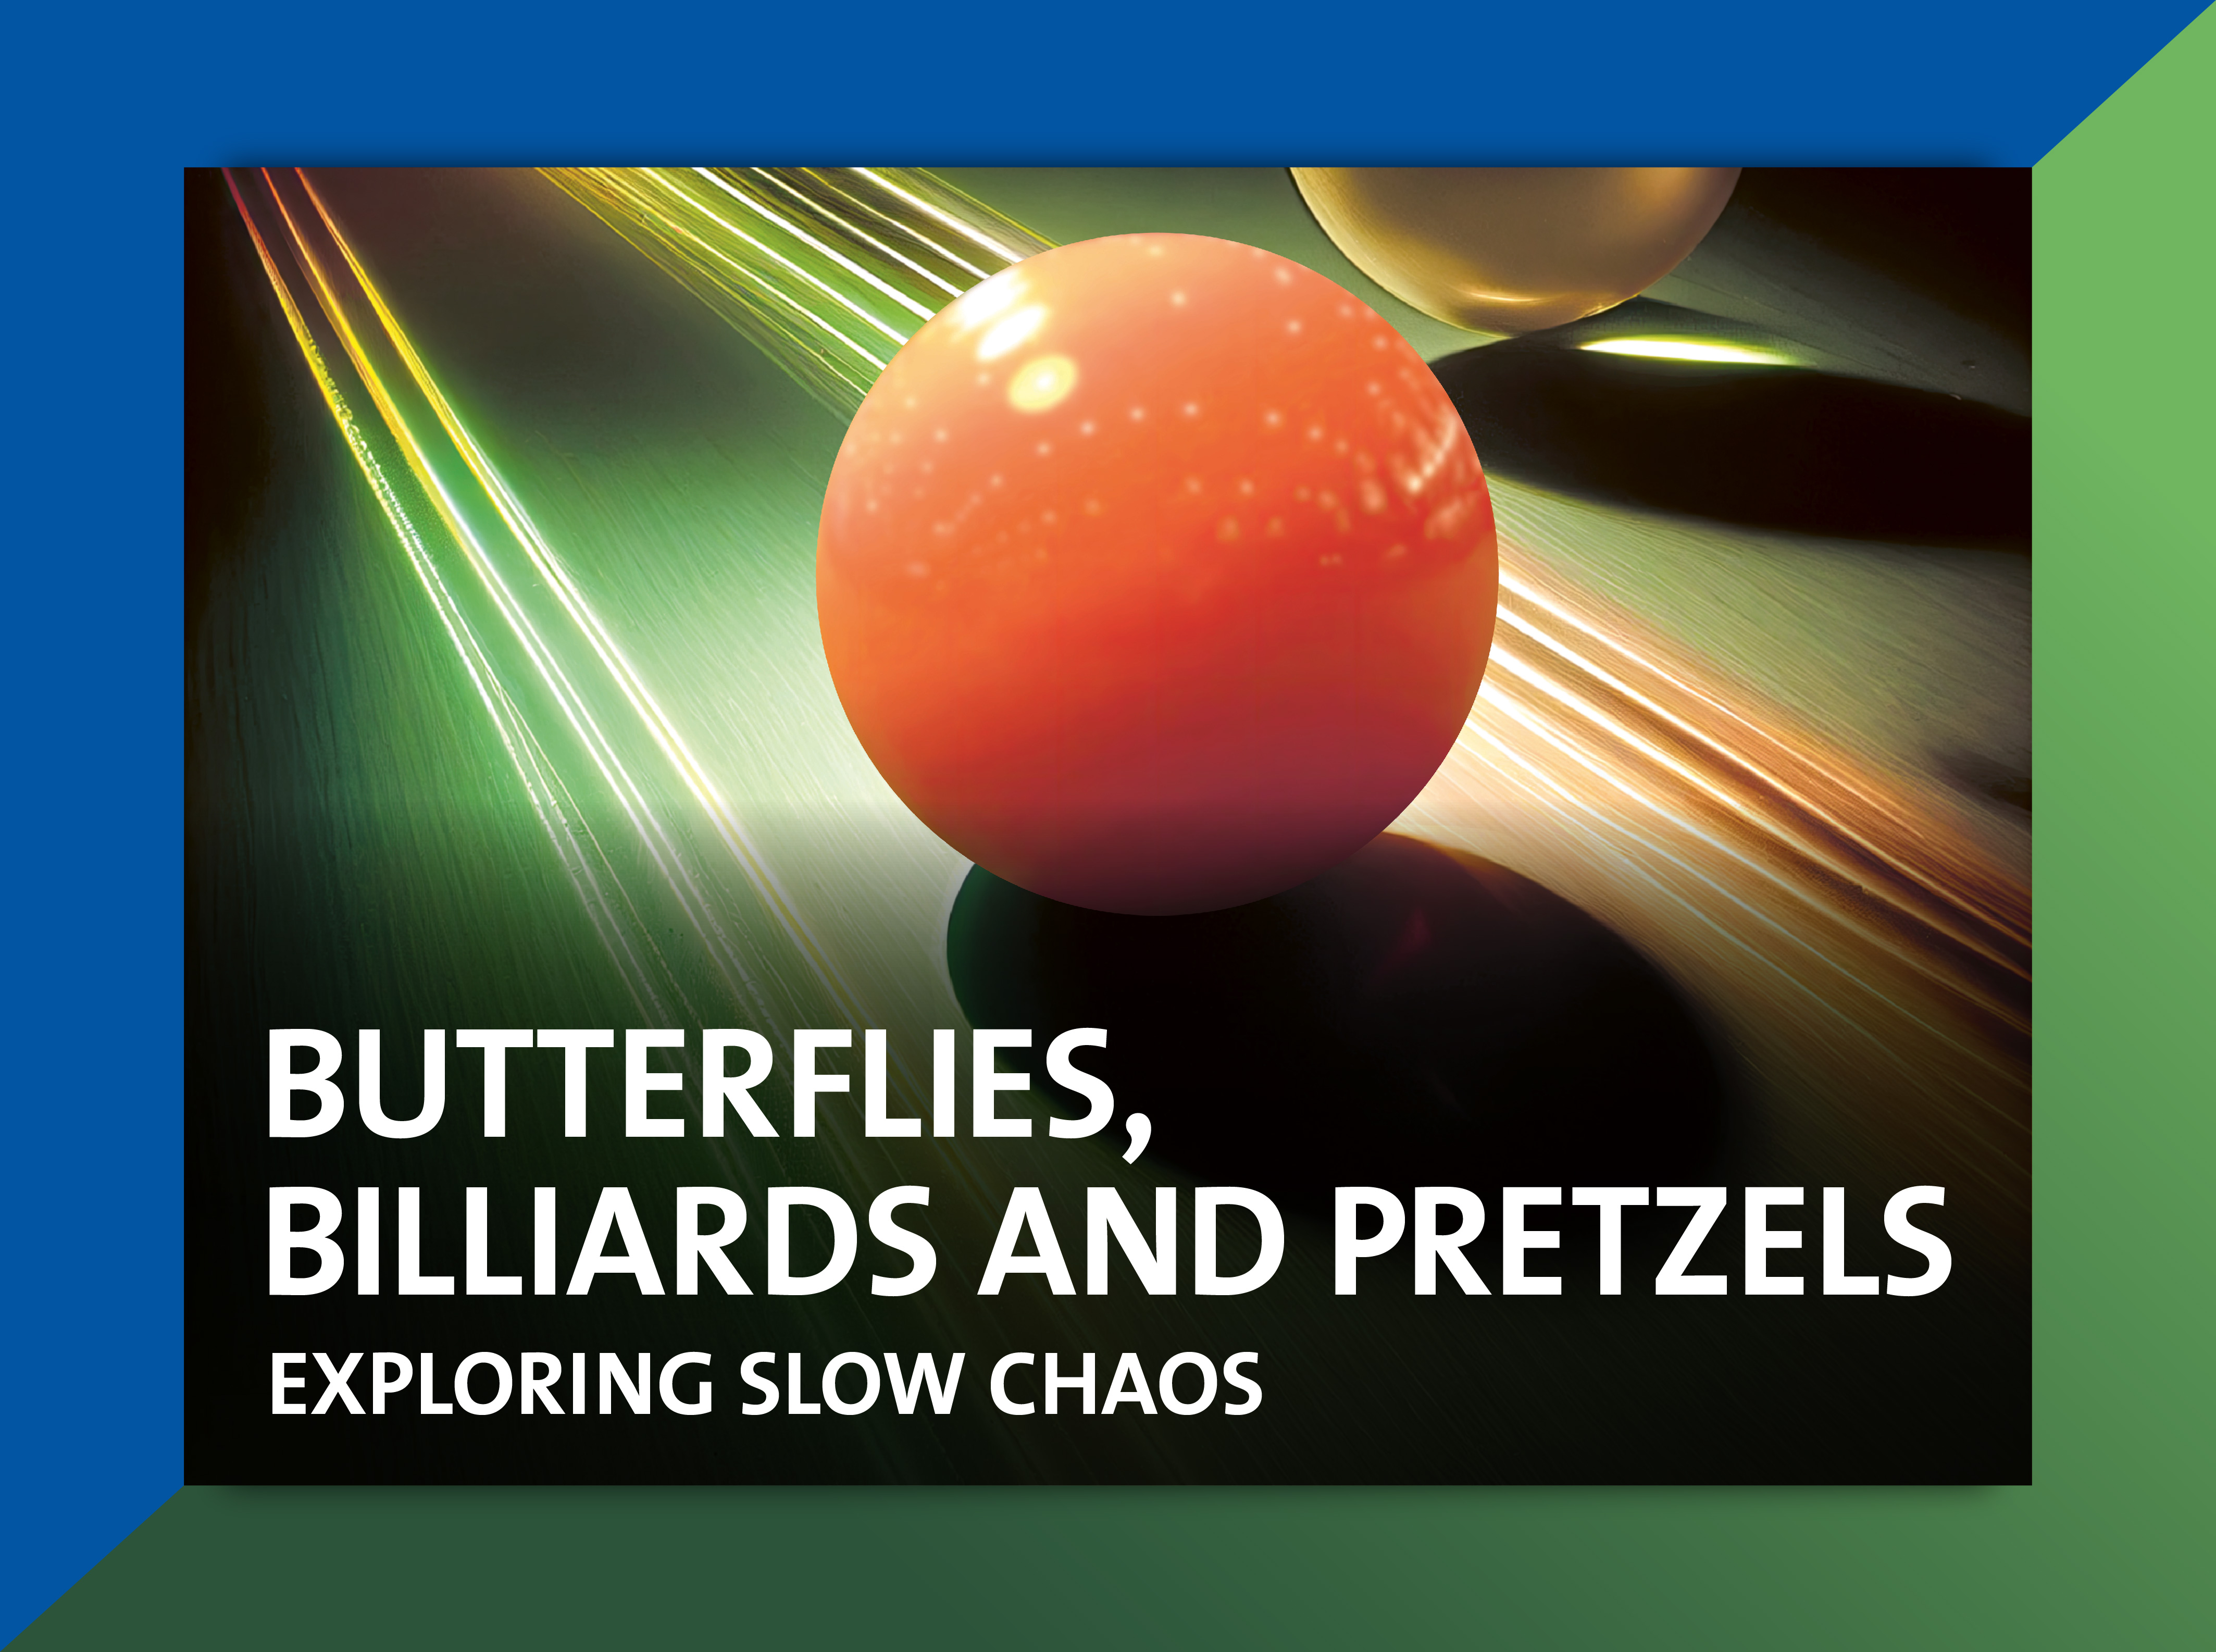 Butterflies, billiards and pretzels – exploring slow chaos